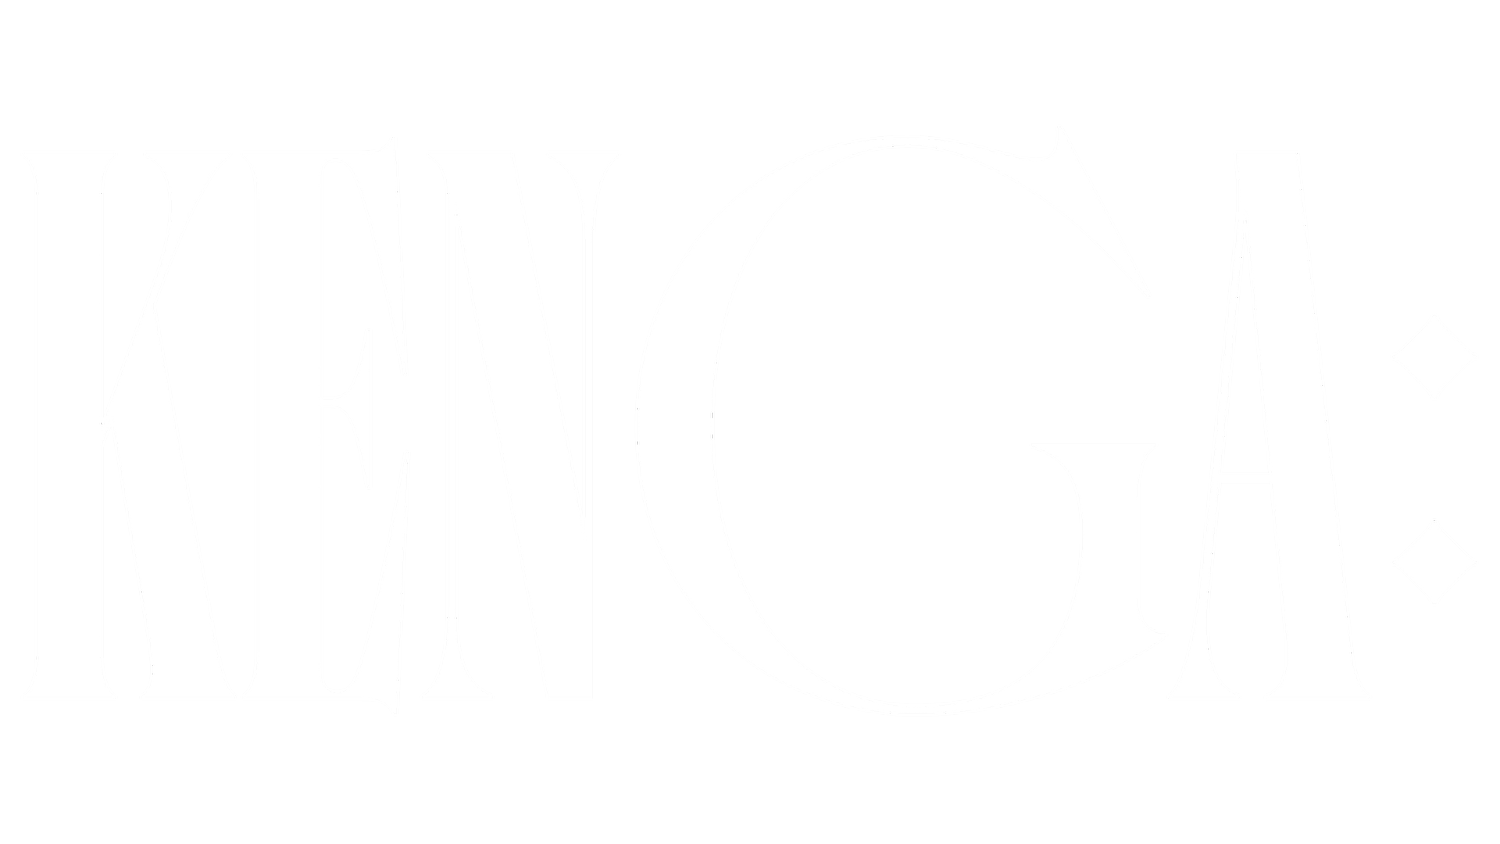 Kenga: The Afro Gen Z Publication